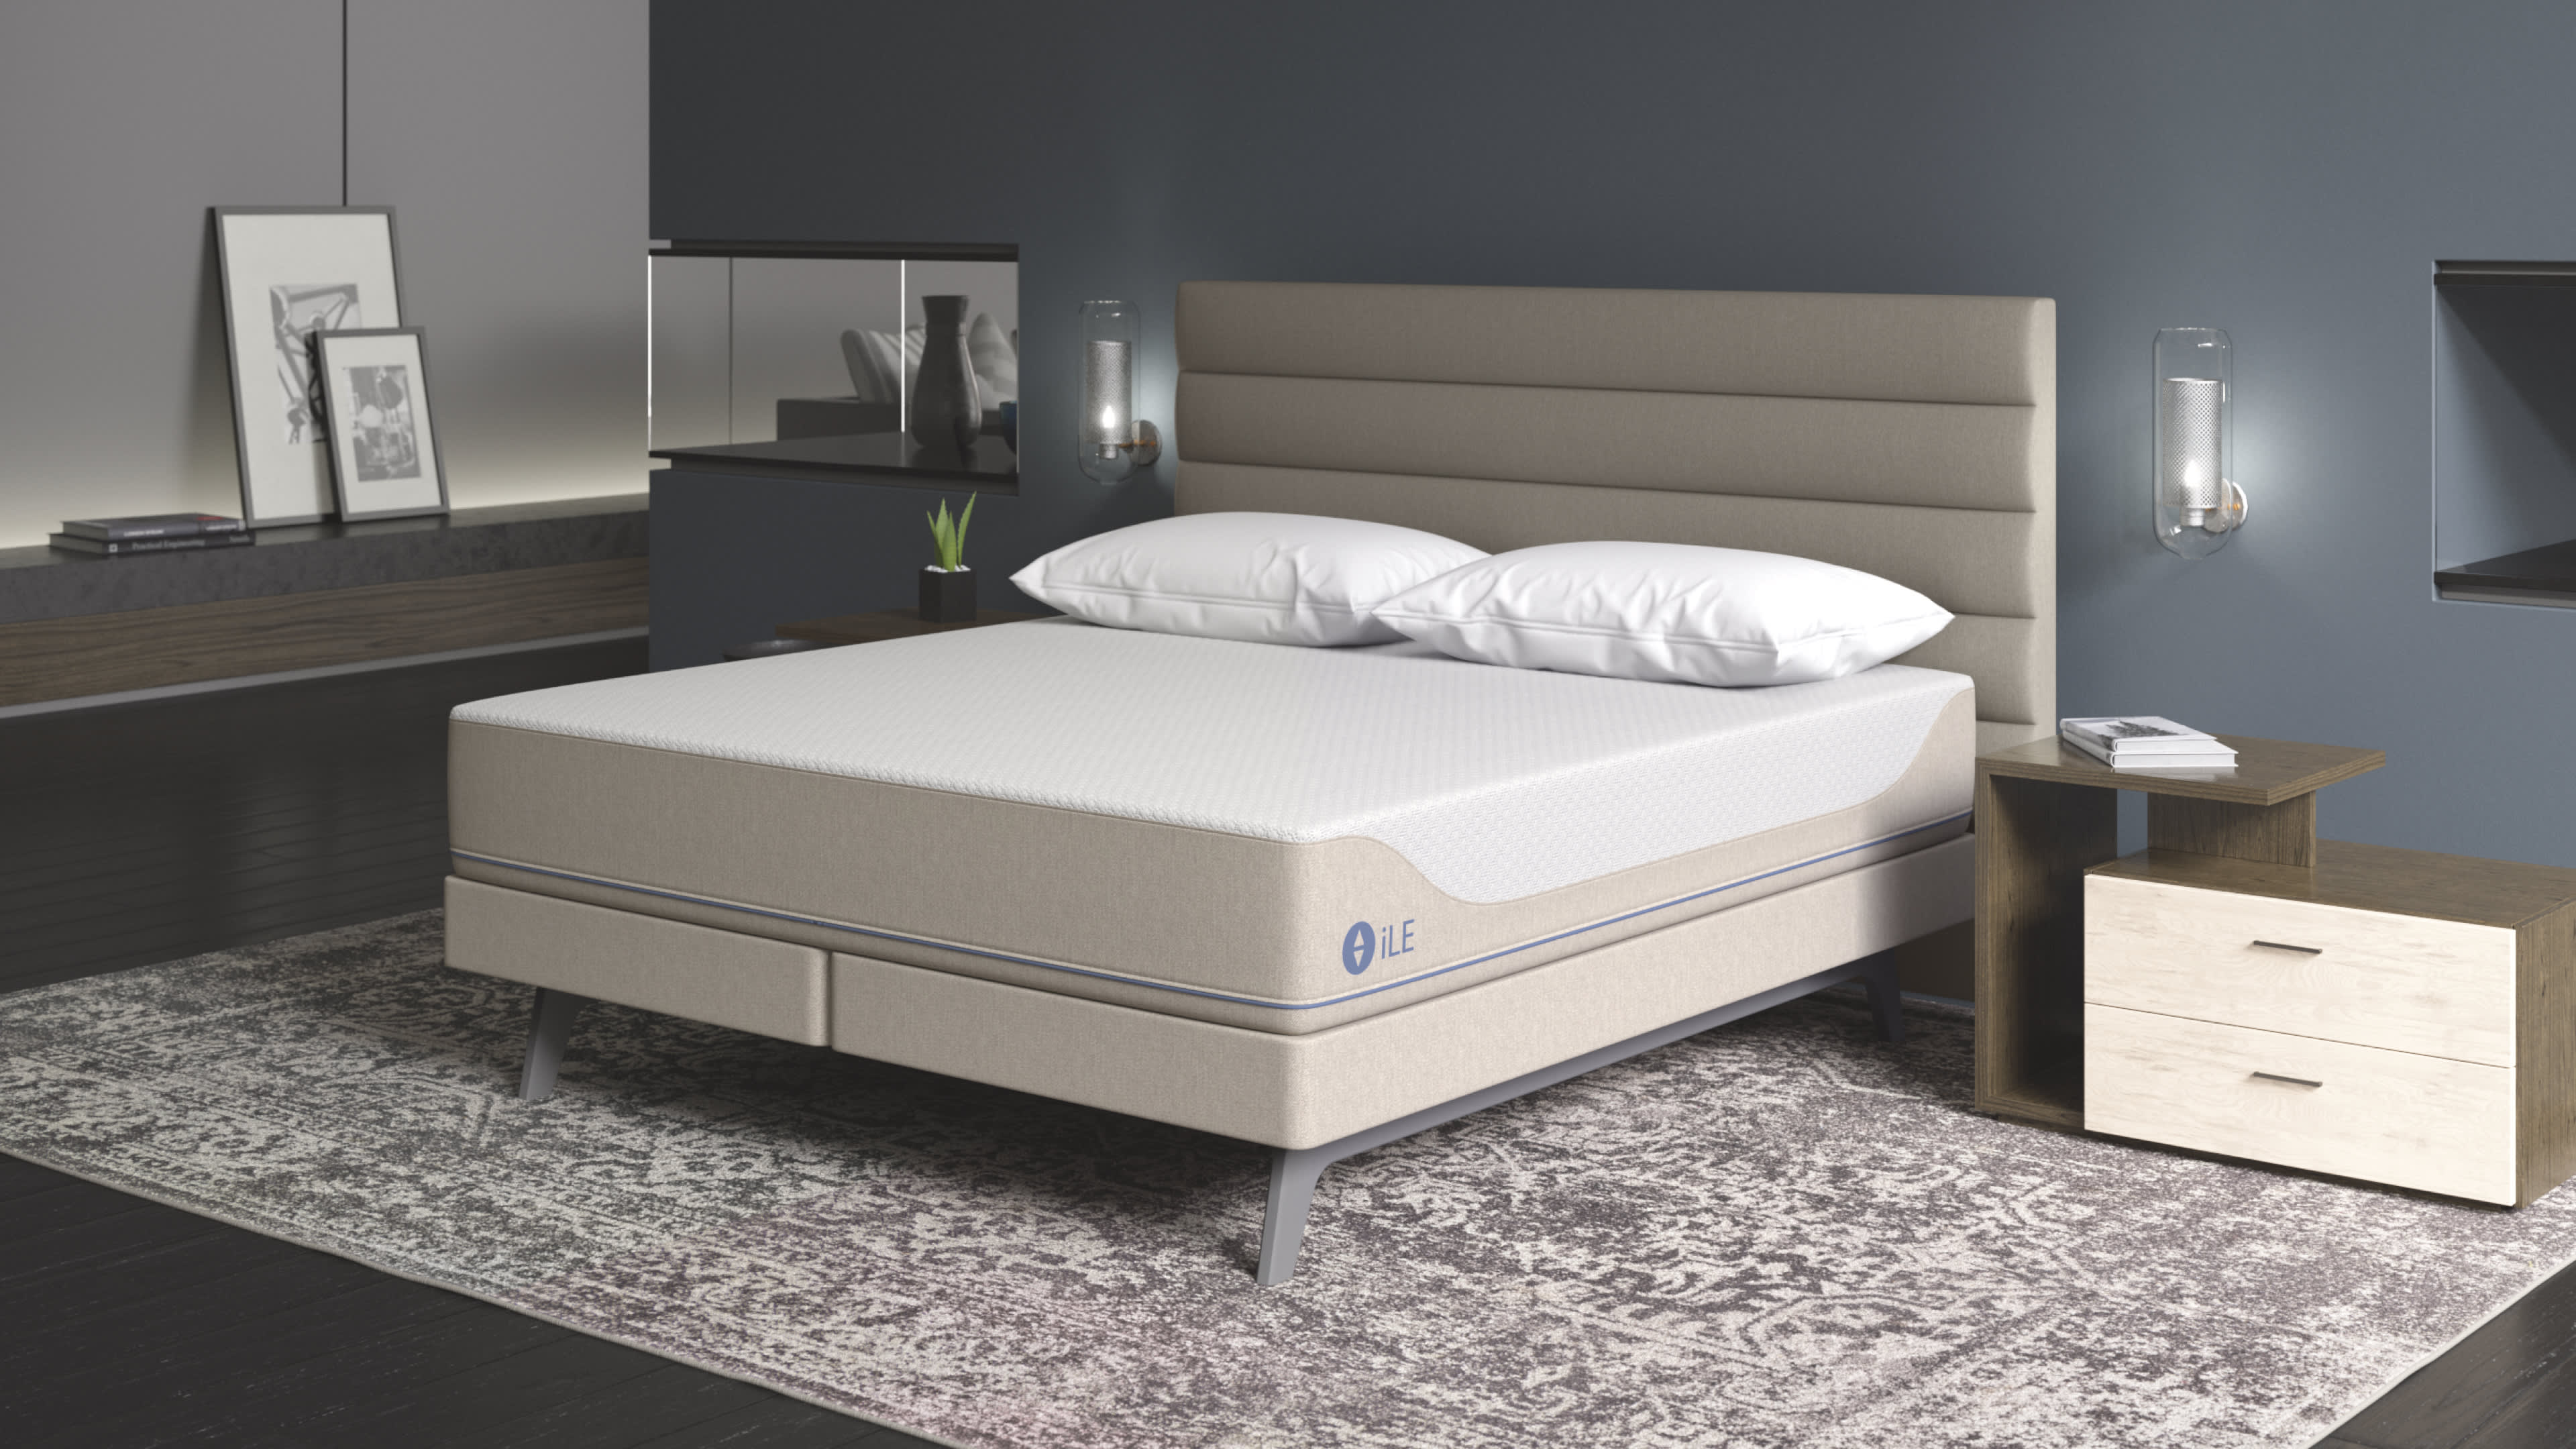 ile sleep number replace mattress